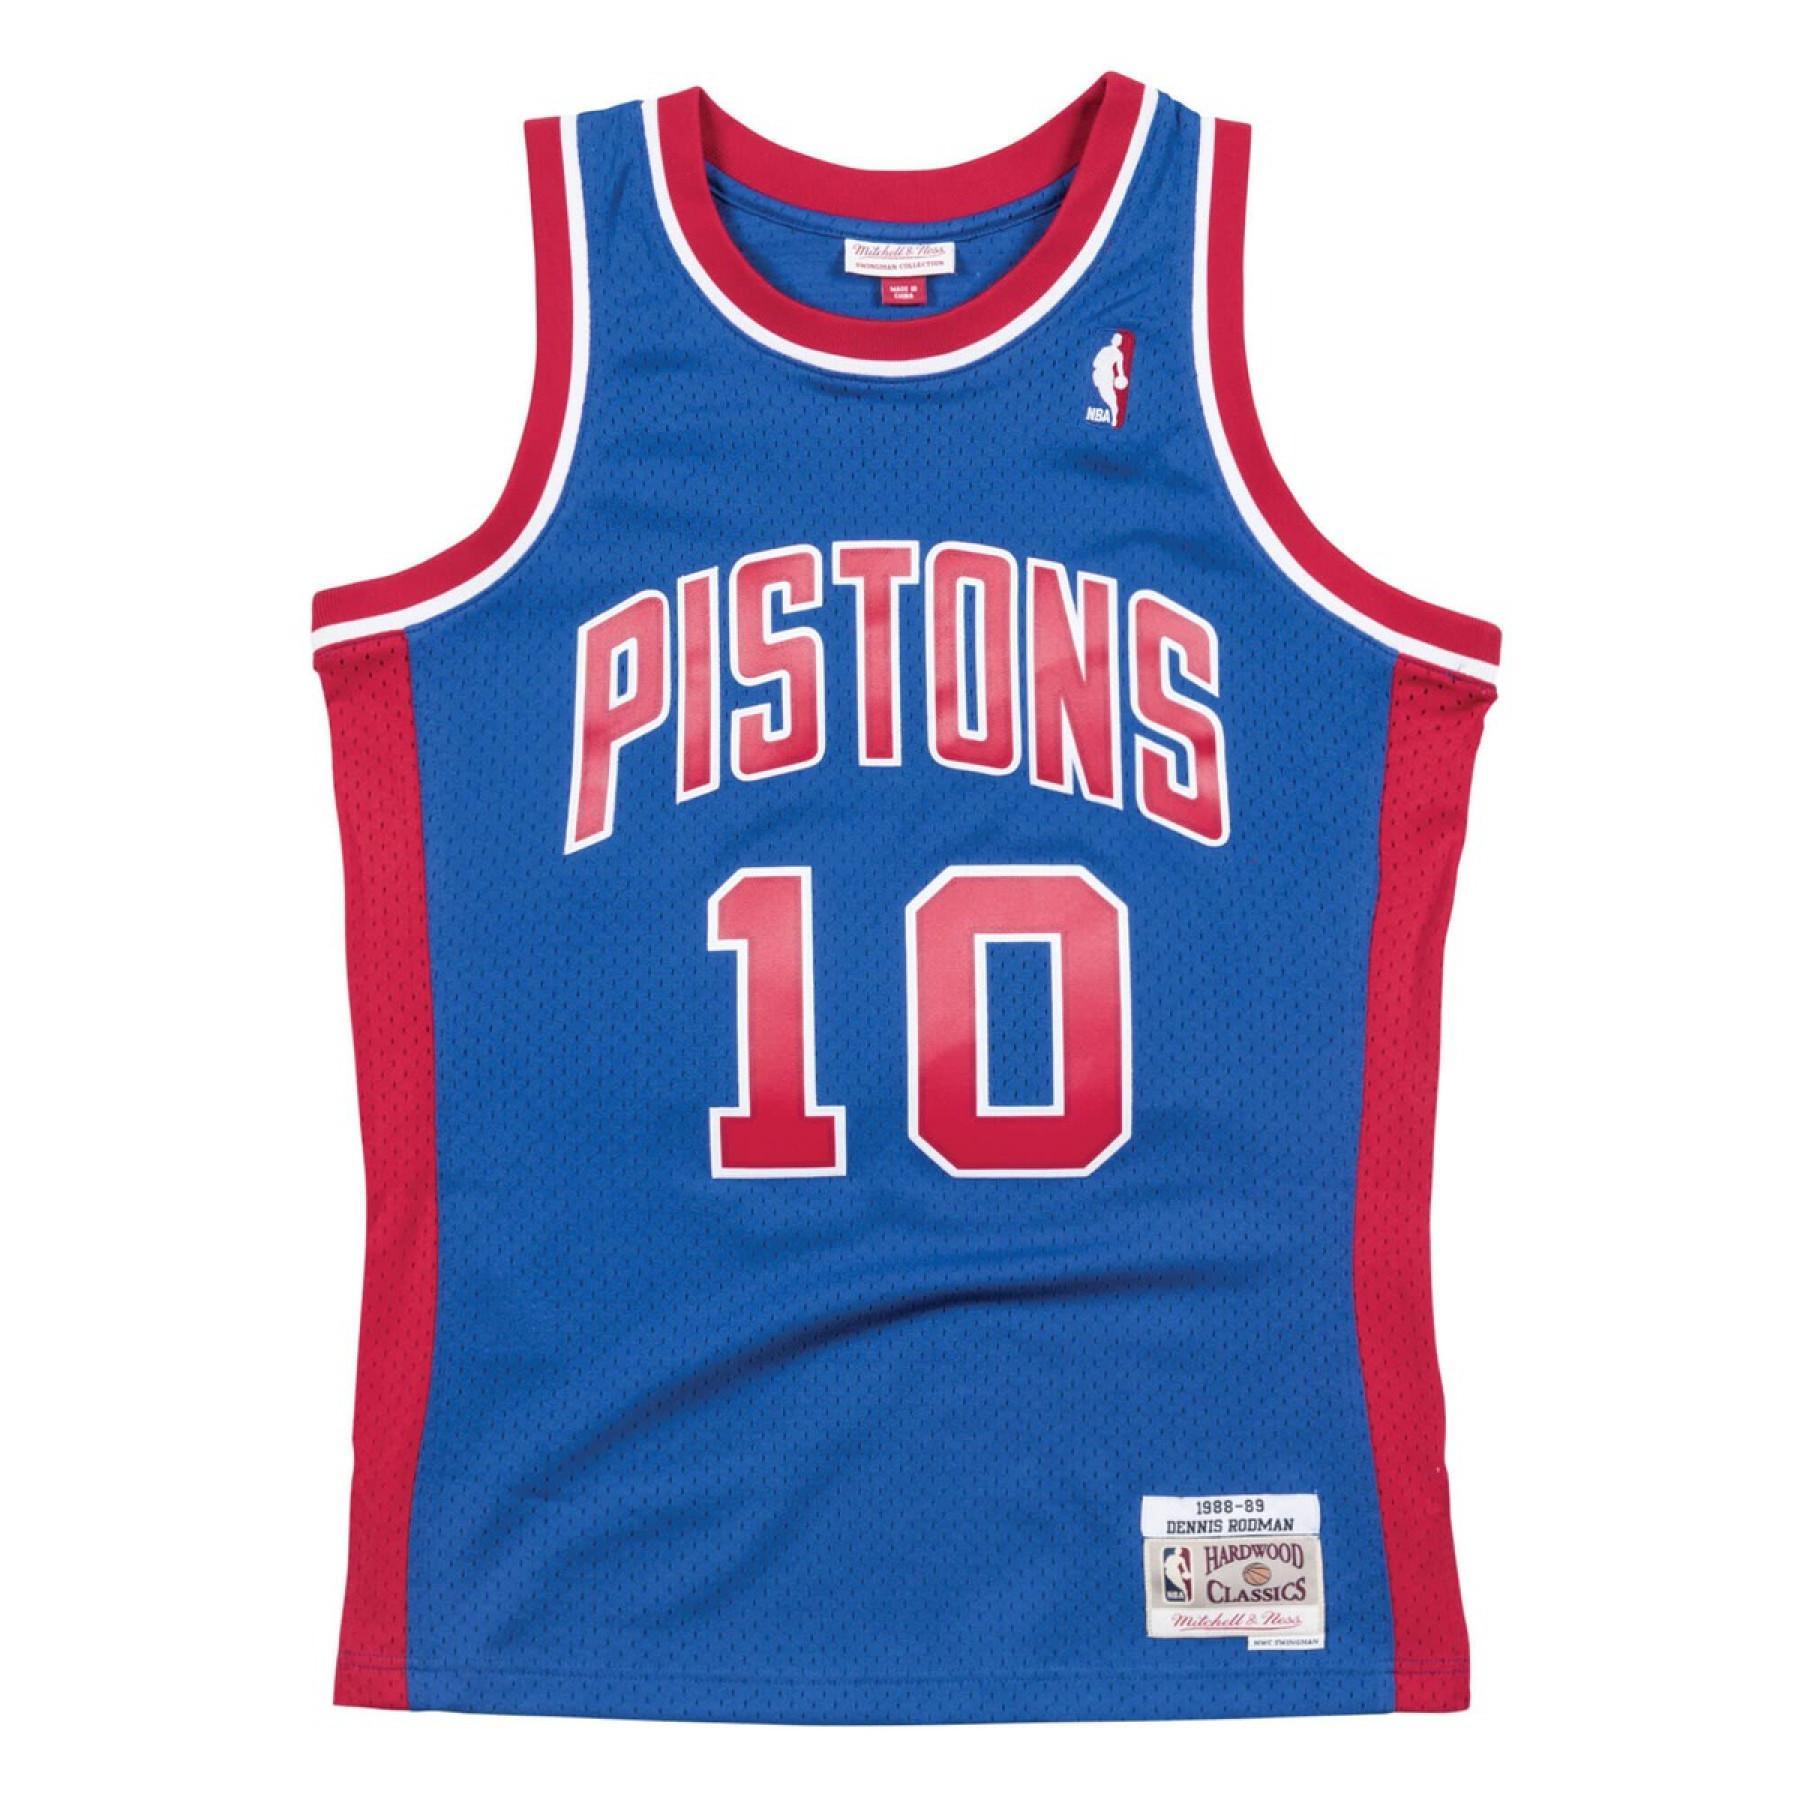 Camisola Detroit Pistons nba